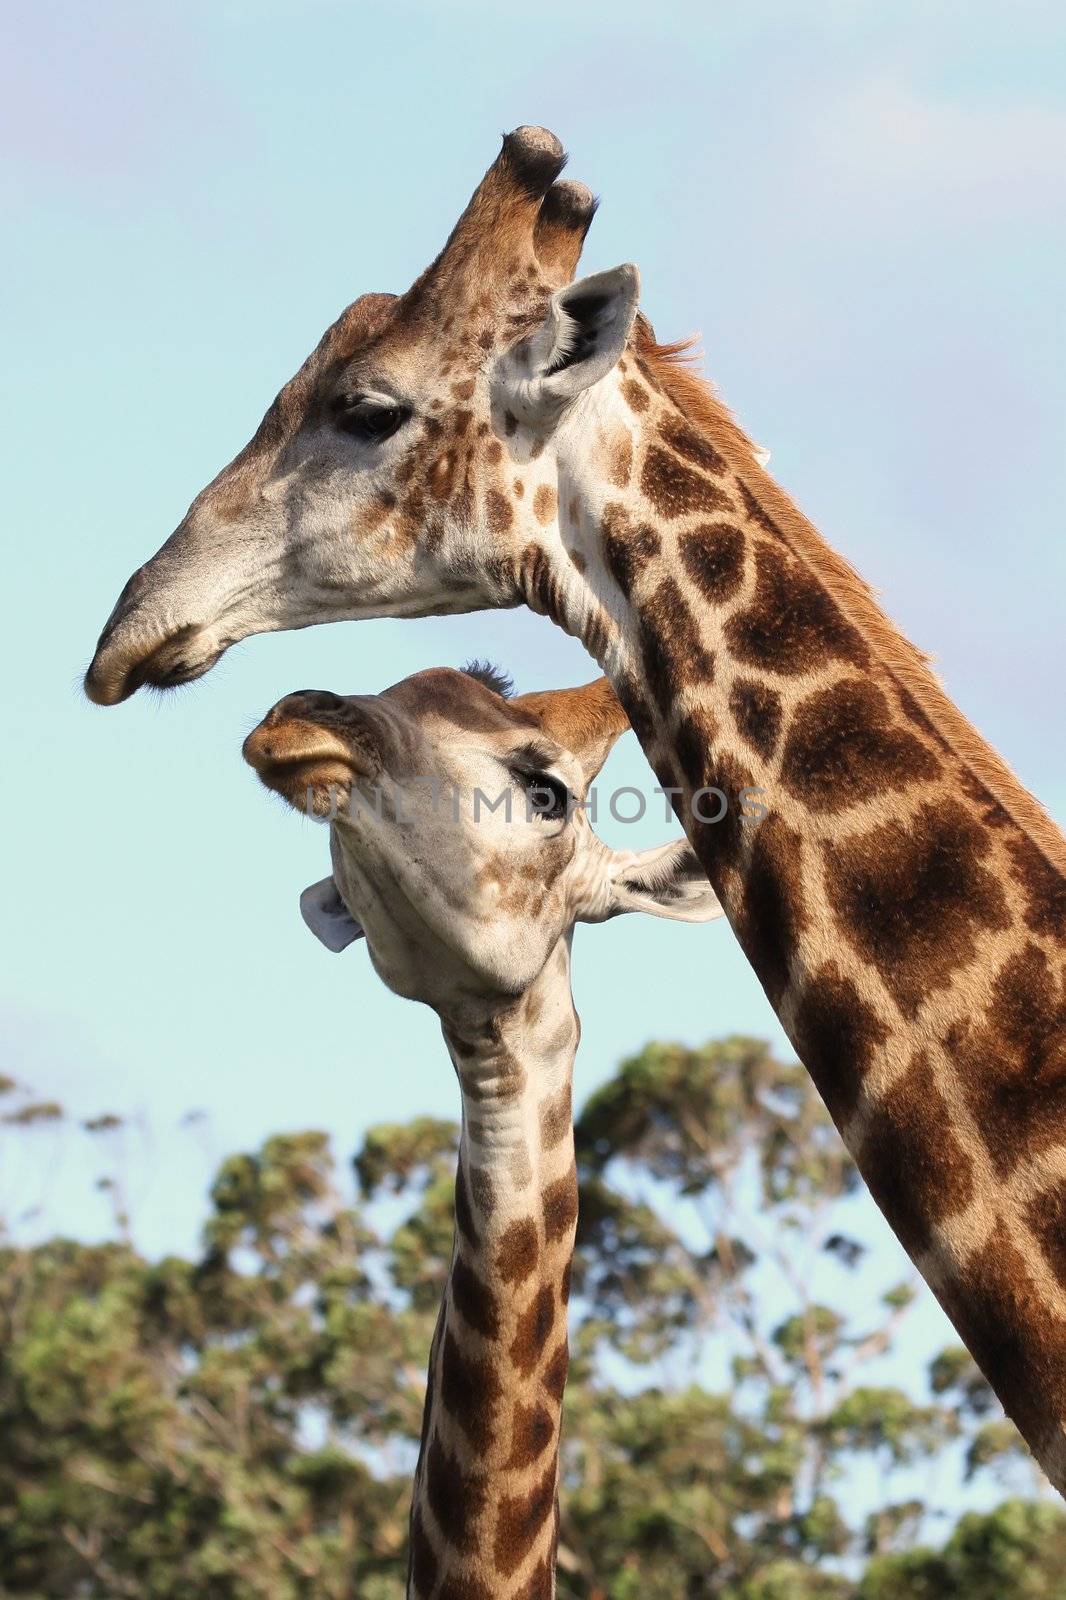 Kissing Giraffes by fouroaks